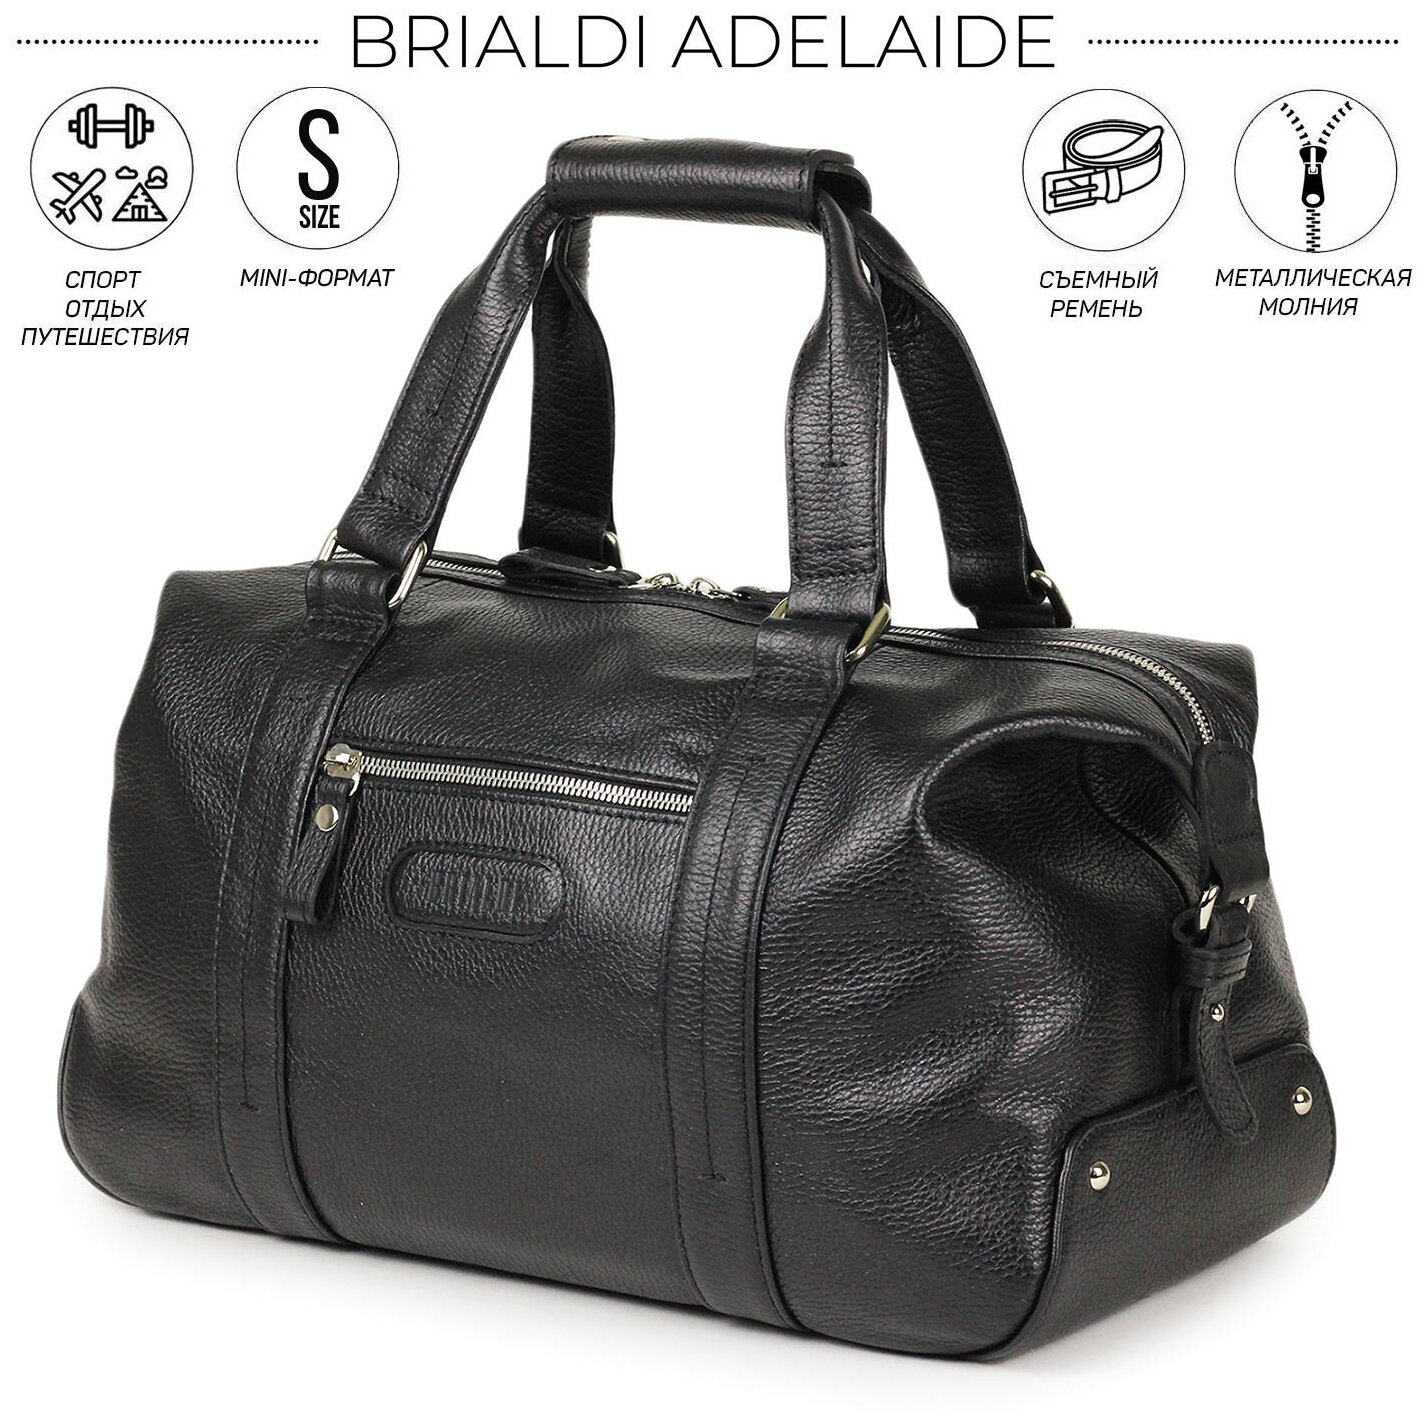 Спортивная сумка малого формата BRIALDI Adelaide (Аделаида) relief black 